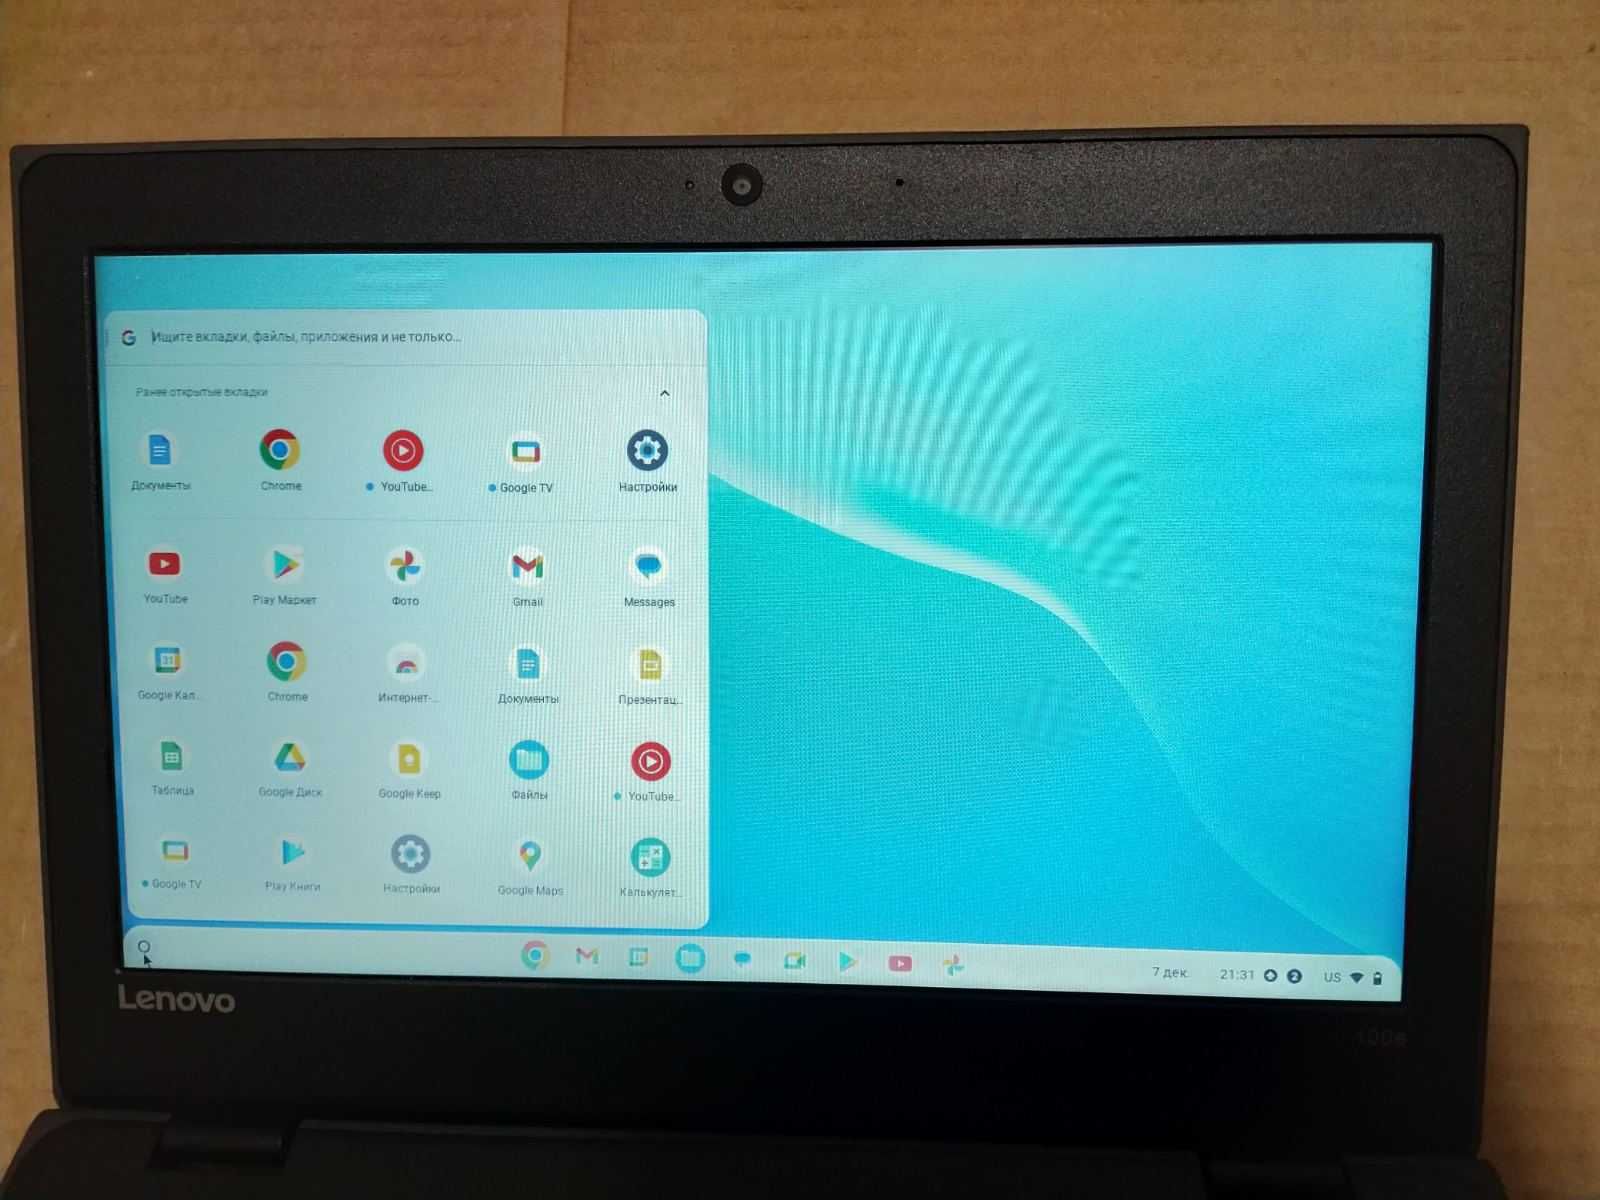 Хромбук-нетбук Lenovo 100e американец  11.6" 4/32GB Chrome OS